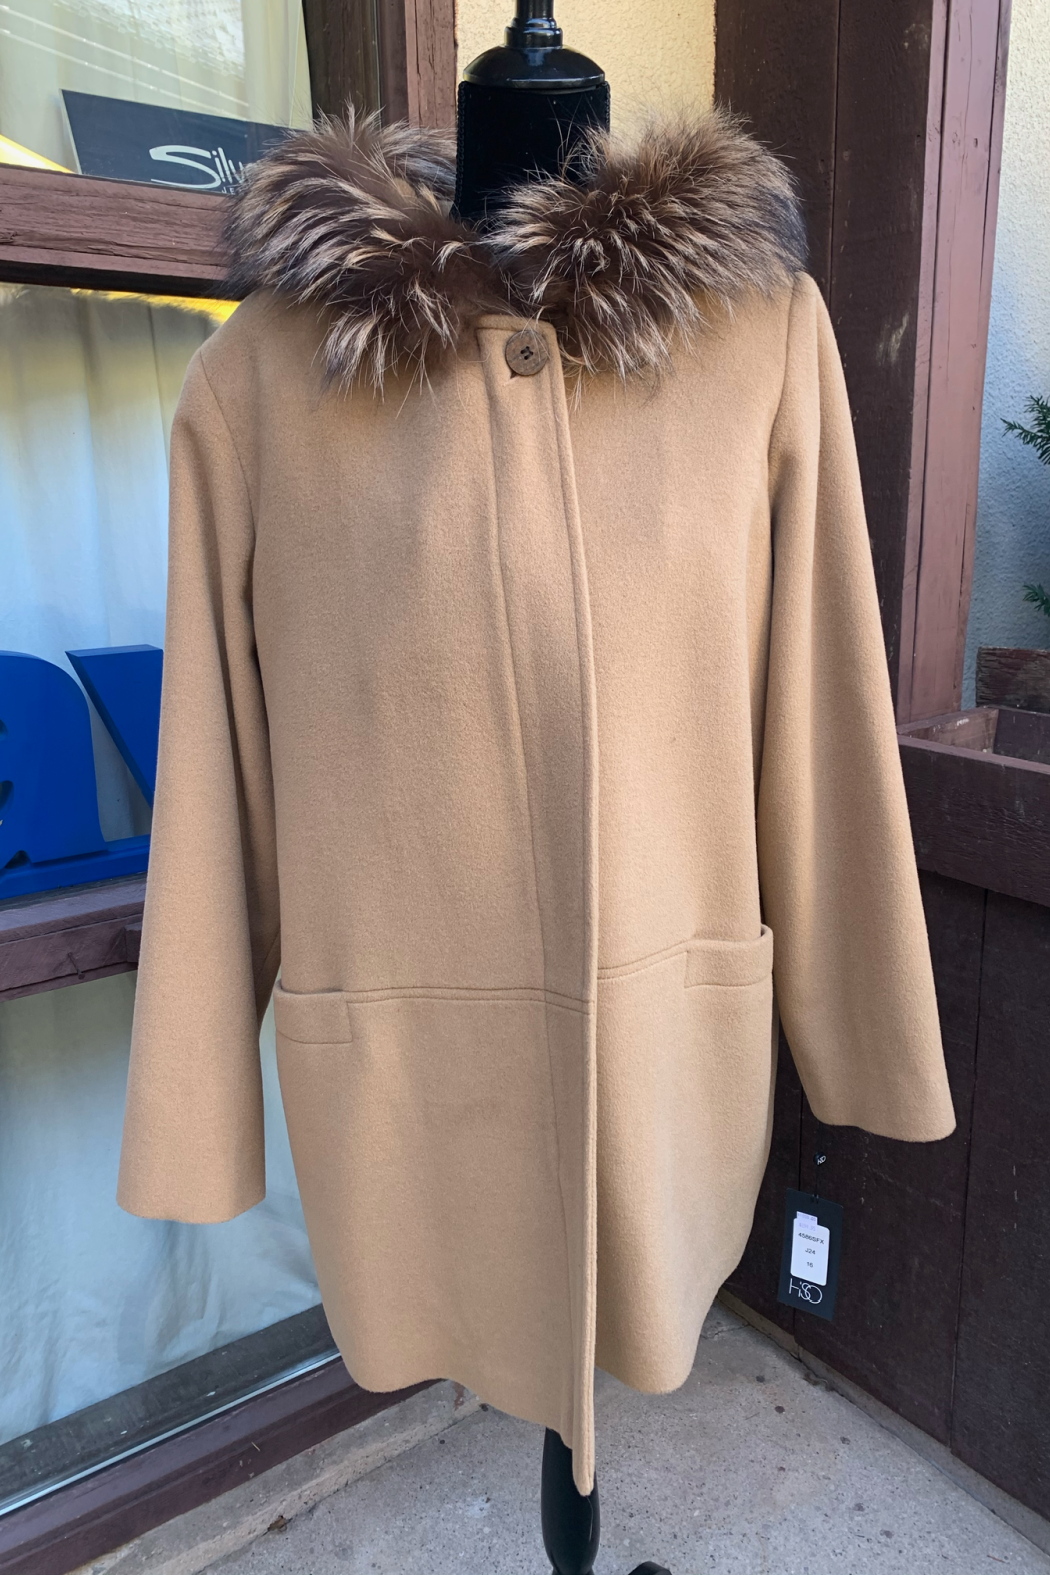 Mallia - Wool & Cashmere Blend Coat